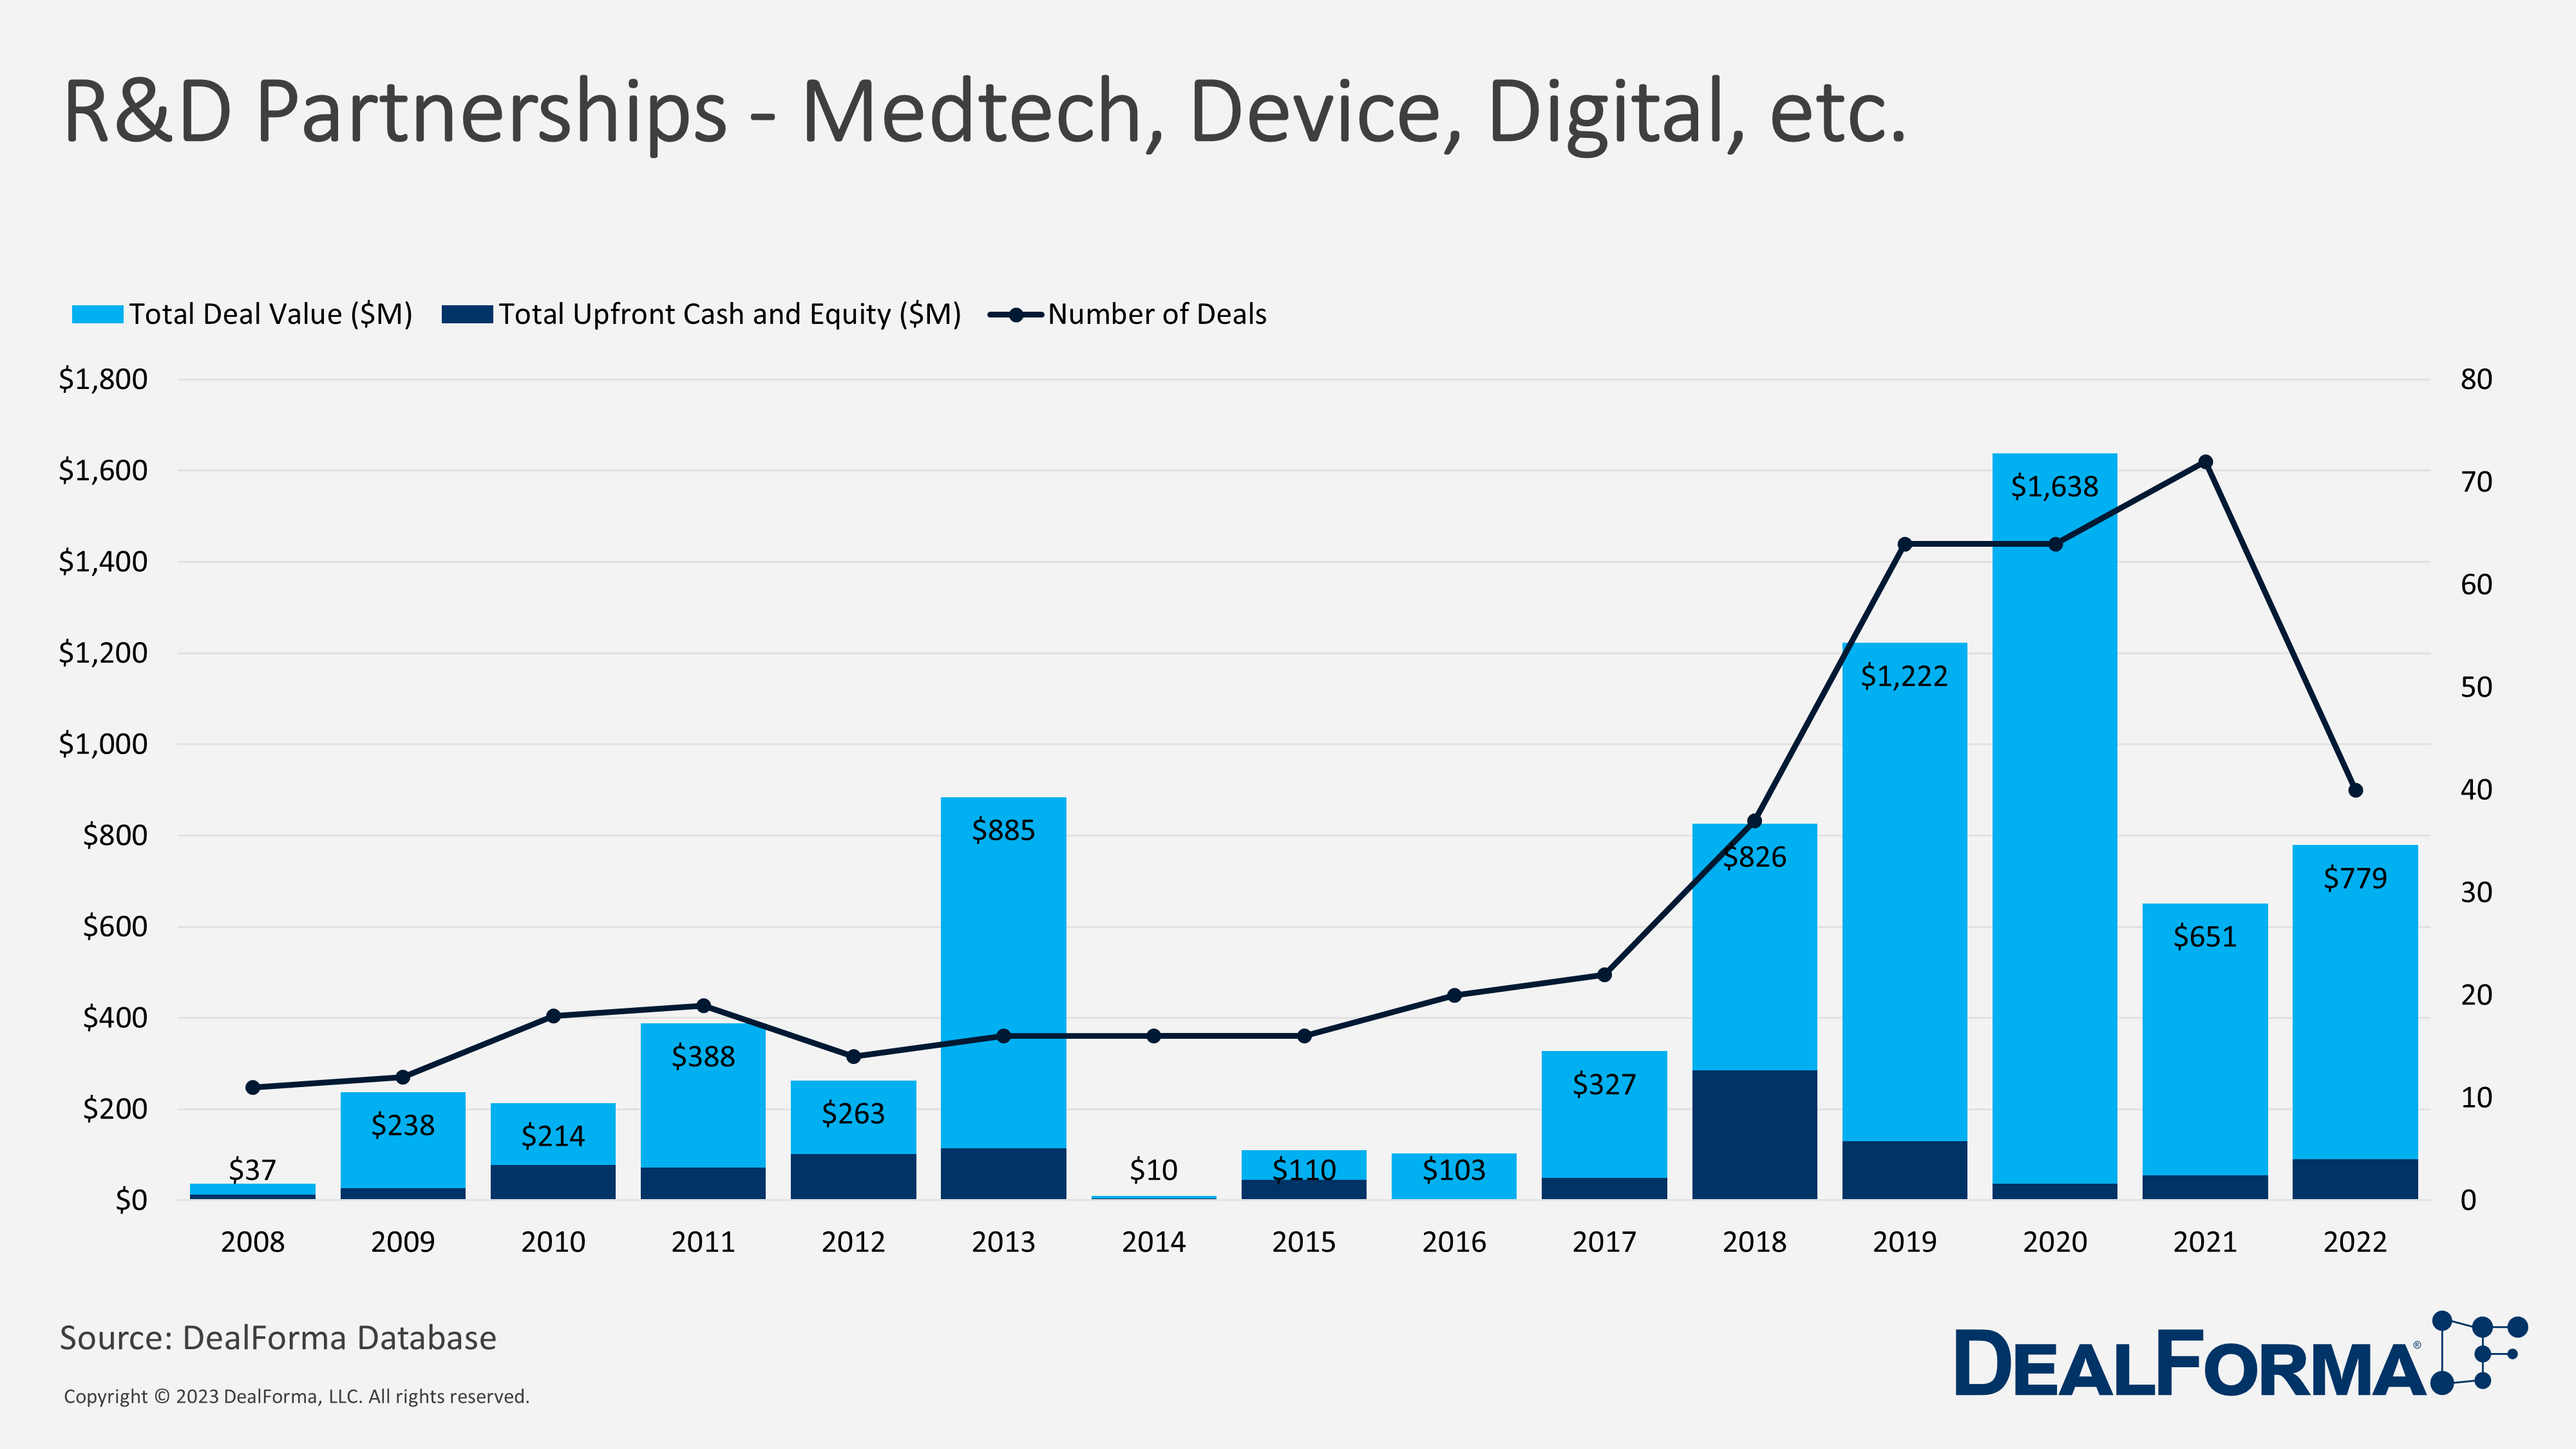 R&D Partnerships - Medtech, Device, Digital, Etc.